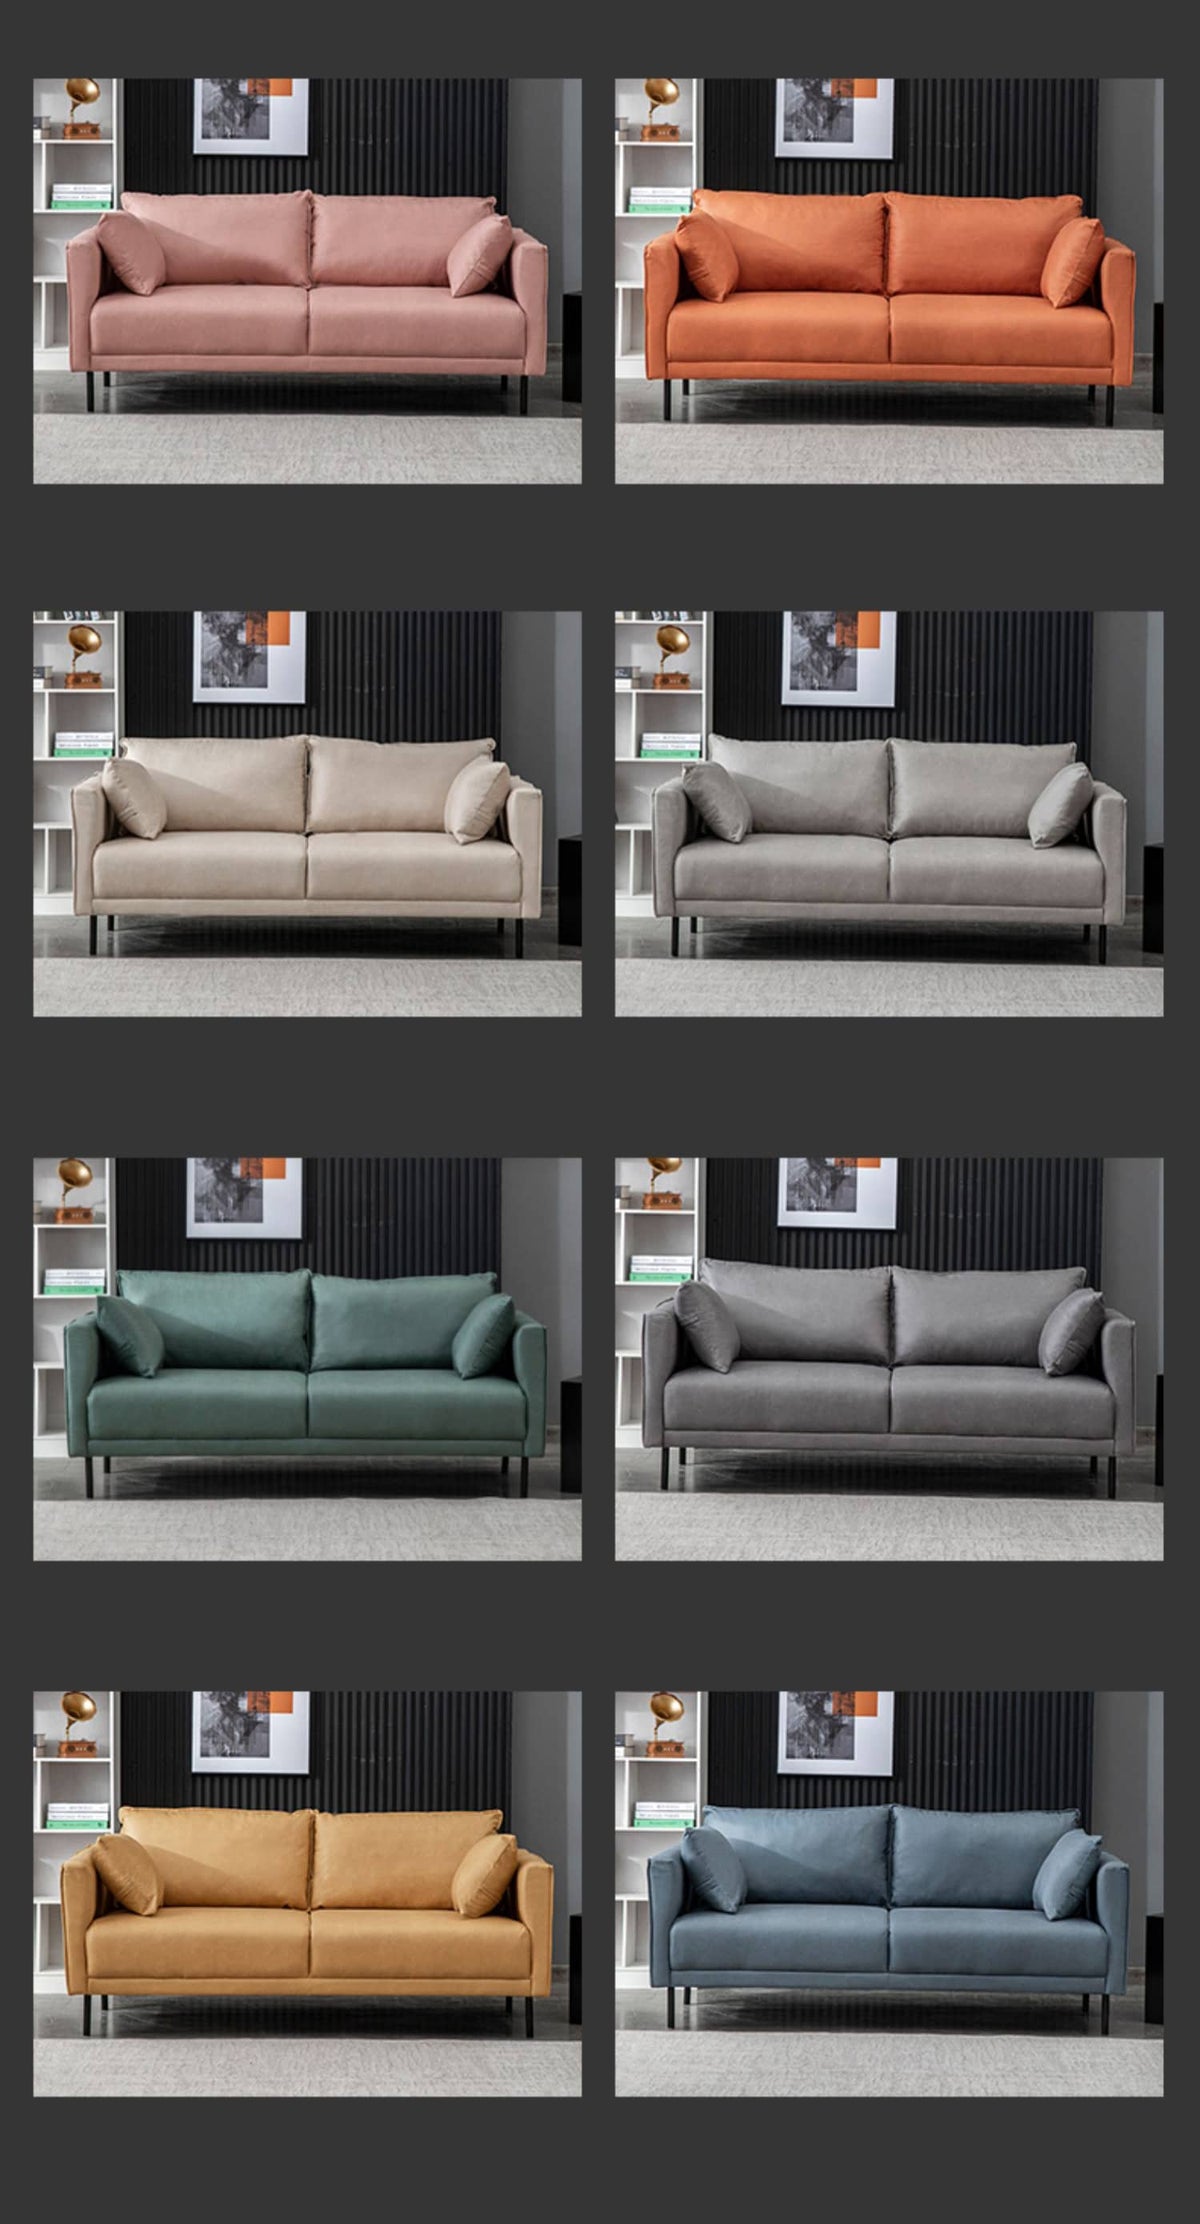 Stylish Multi-Color Fabric Sofas: Orange, Dark Green, Blue, and More - Ultimate Comfort & Elegance! ja-22